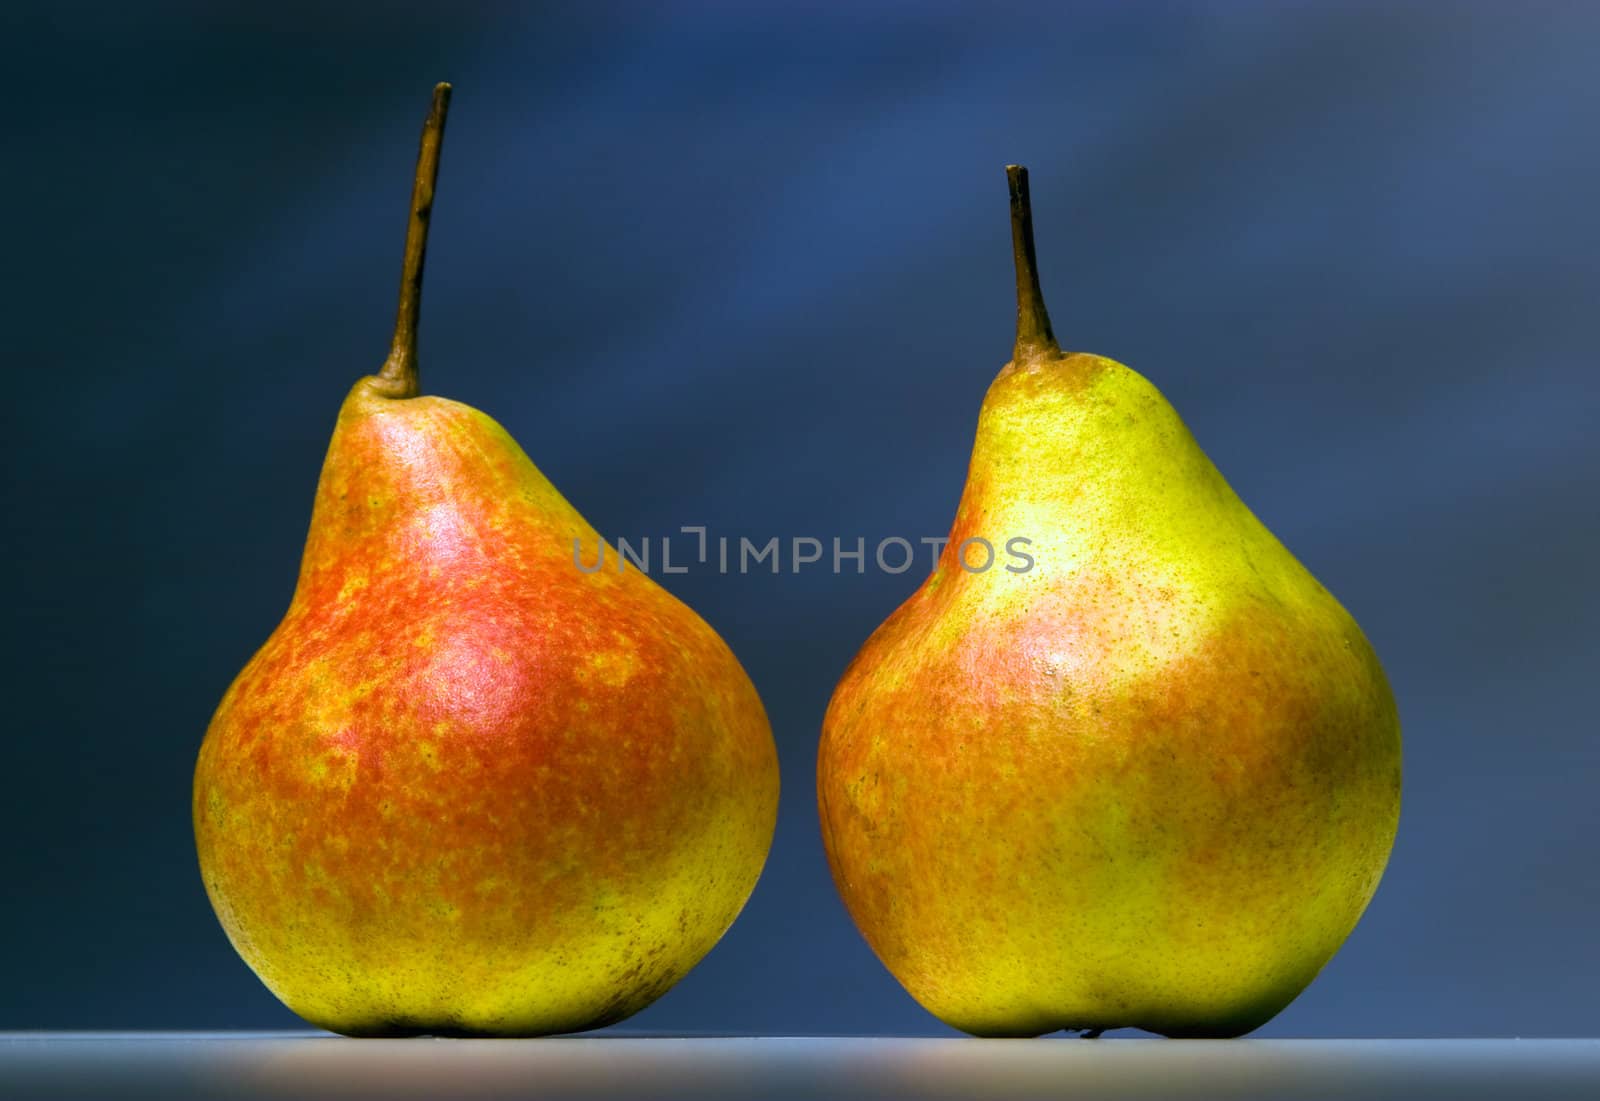 Two pears on a dark background by romanshyshak